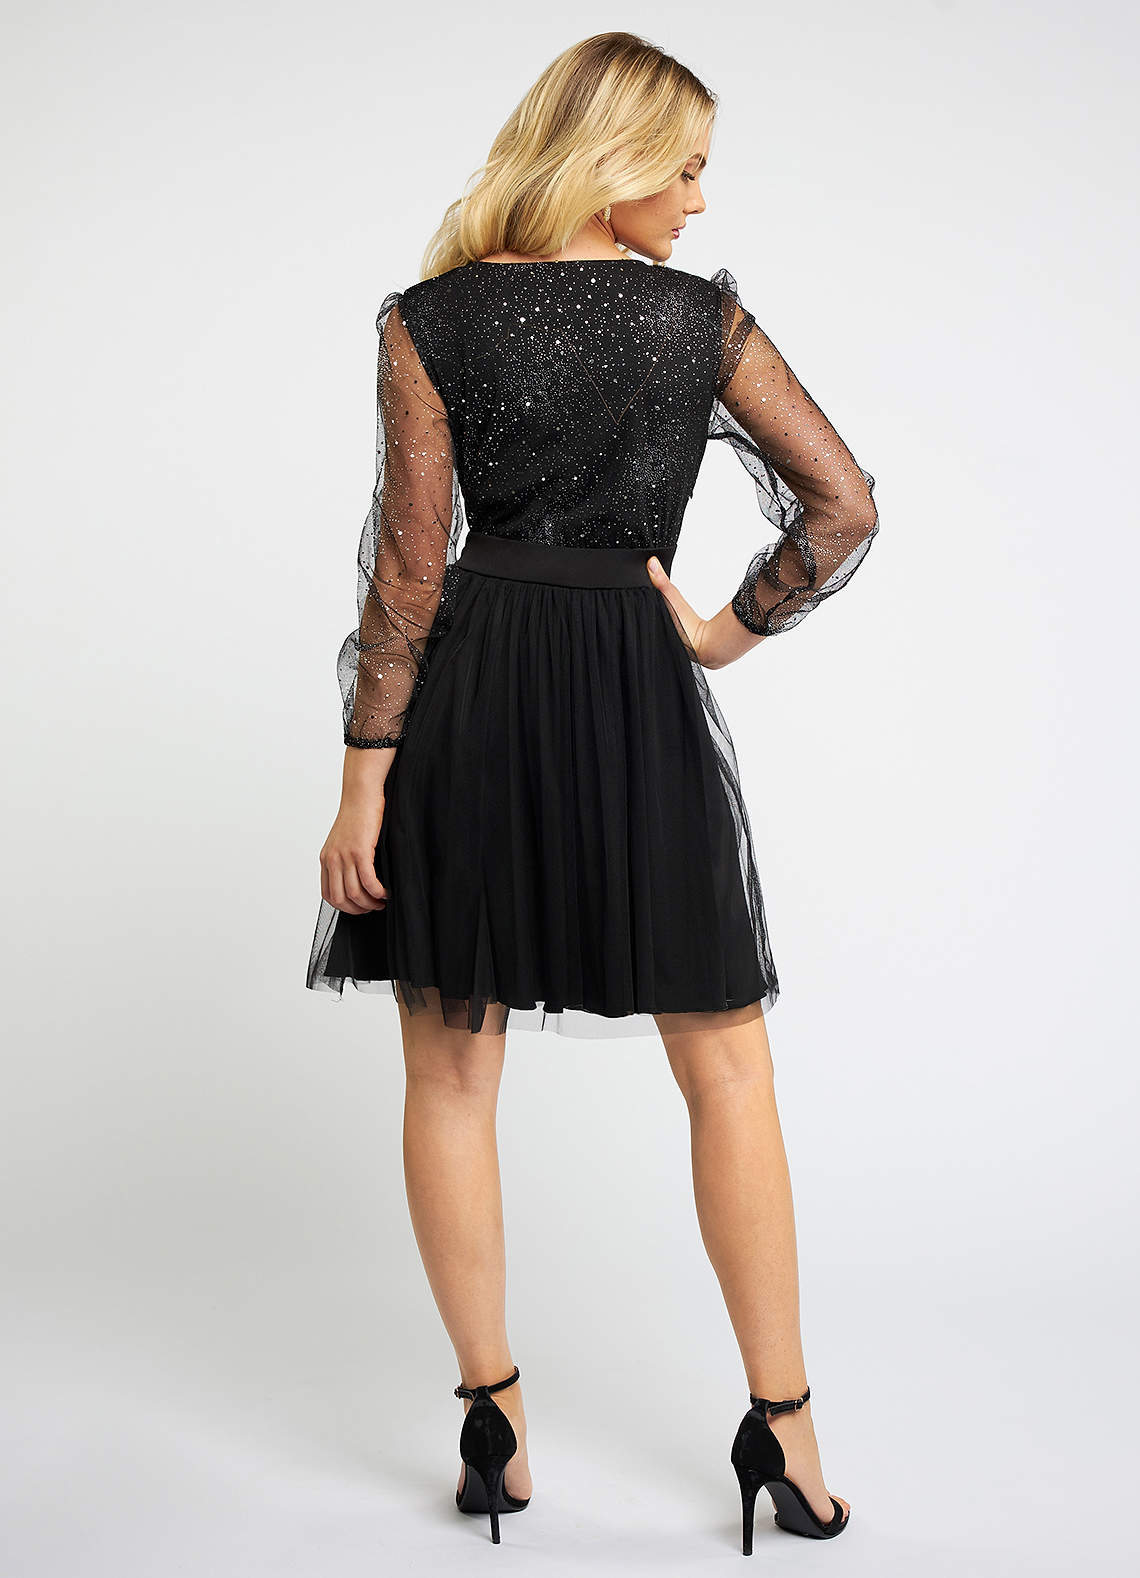 Glennallen Black Sparkly Mini Dress image1